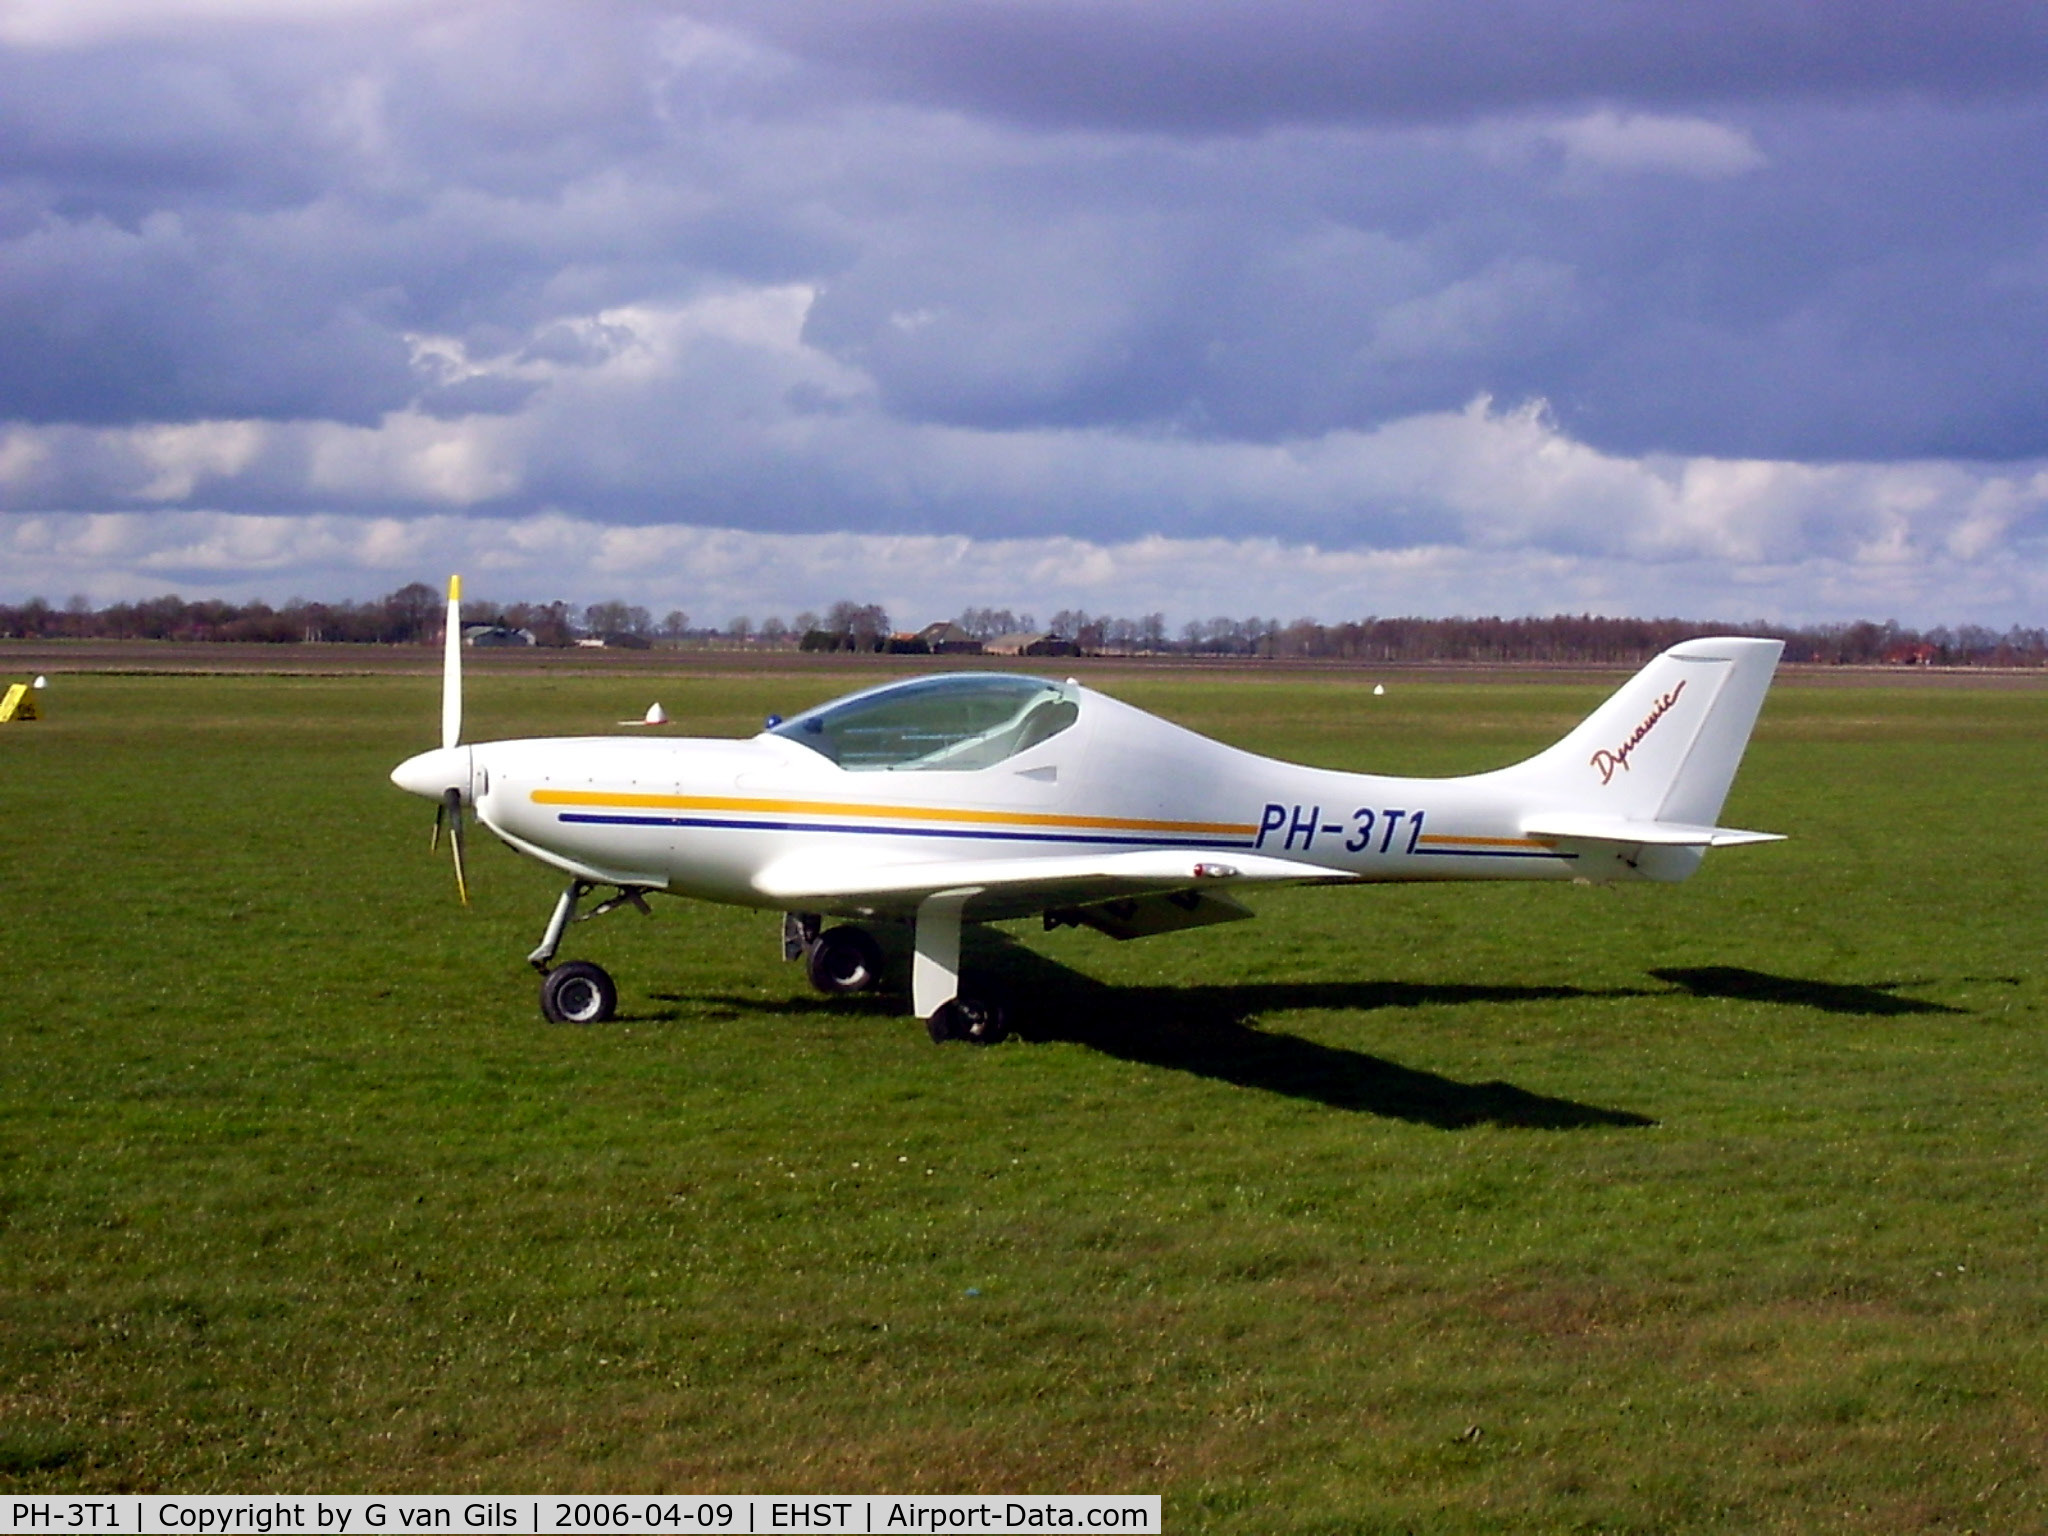 PH-3T1, 2003 Aerospool WT-9 Dynamic C/N DY028/2003, PH-3T1 aircraft based at Vereniging van Ultralichte Vliegtuigen Westerwolde. Stadskanaal Netherlands